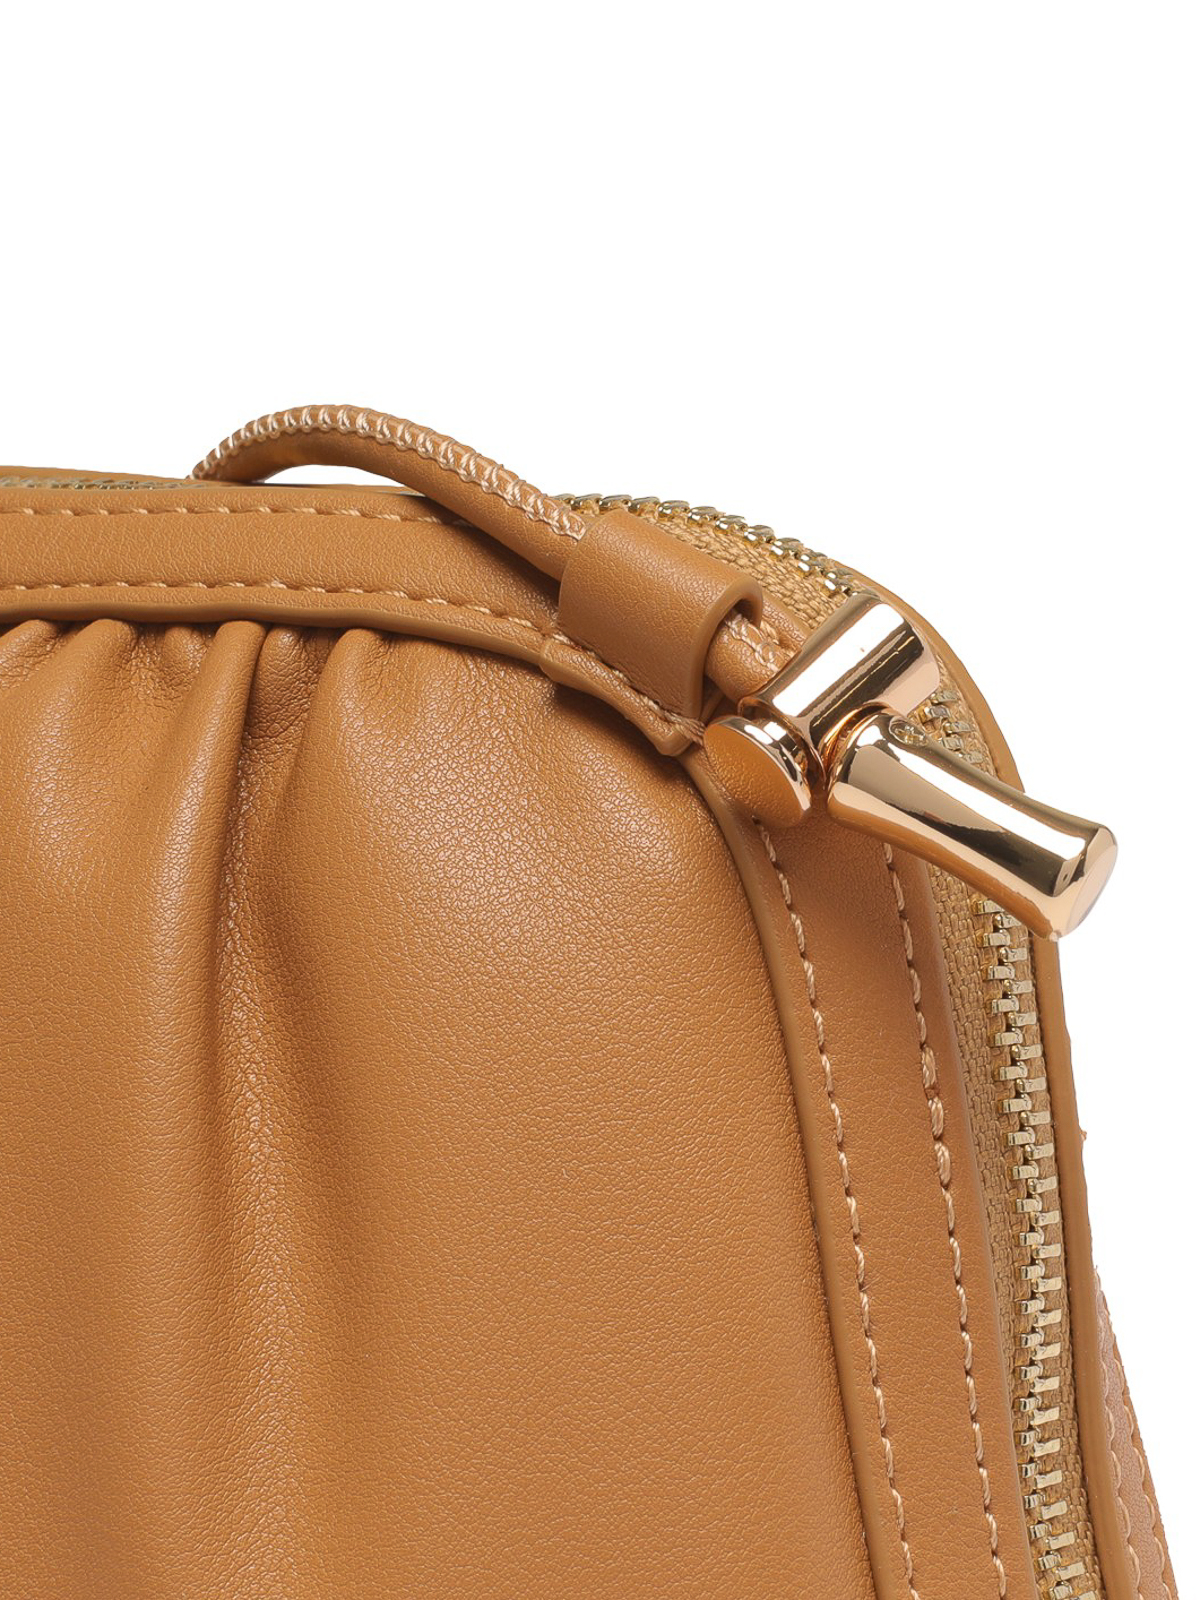 Grace leather cross-body bag, A.P.C., MATCHESFASHION